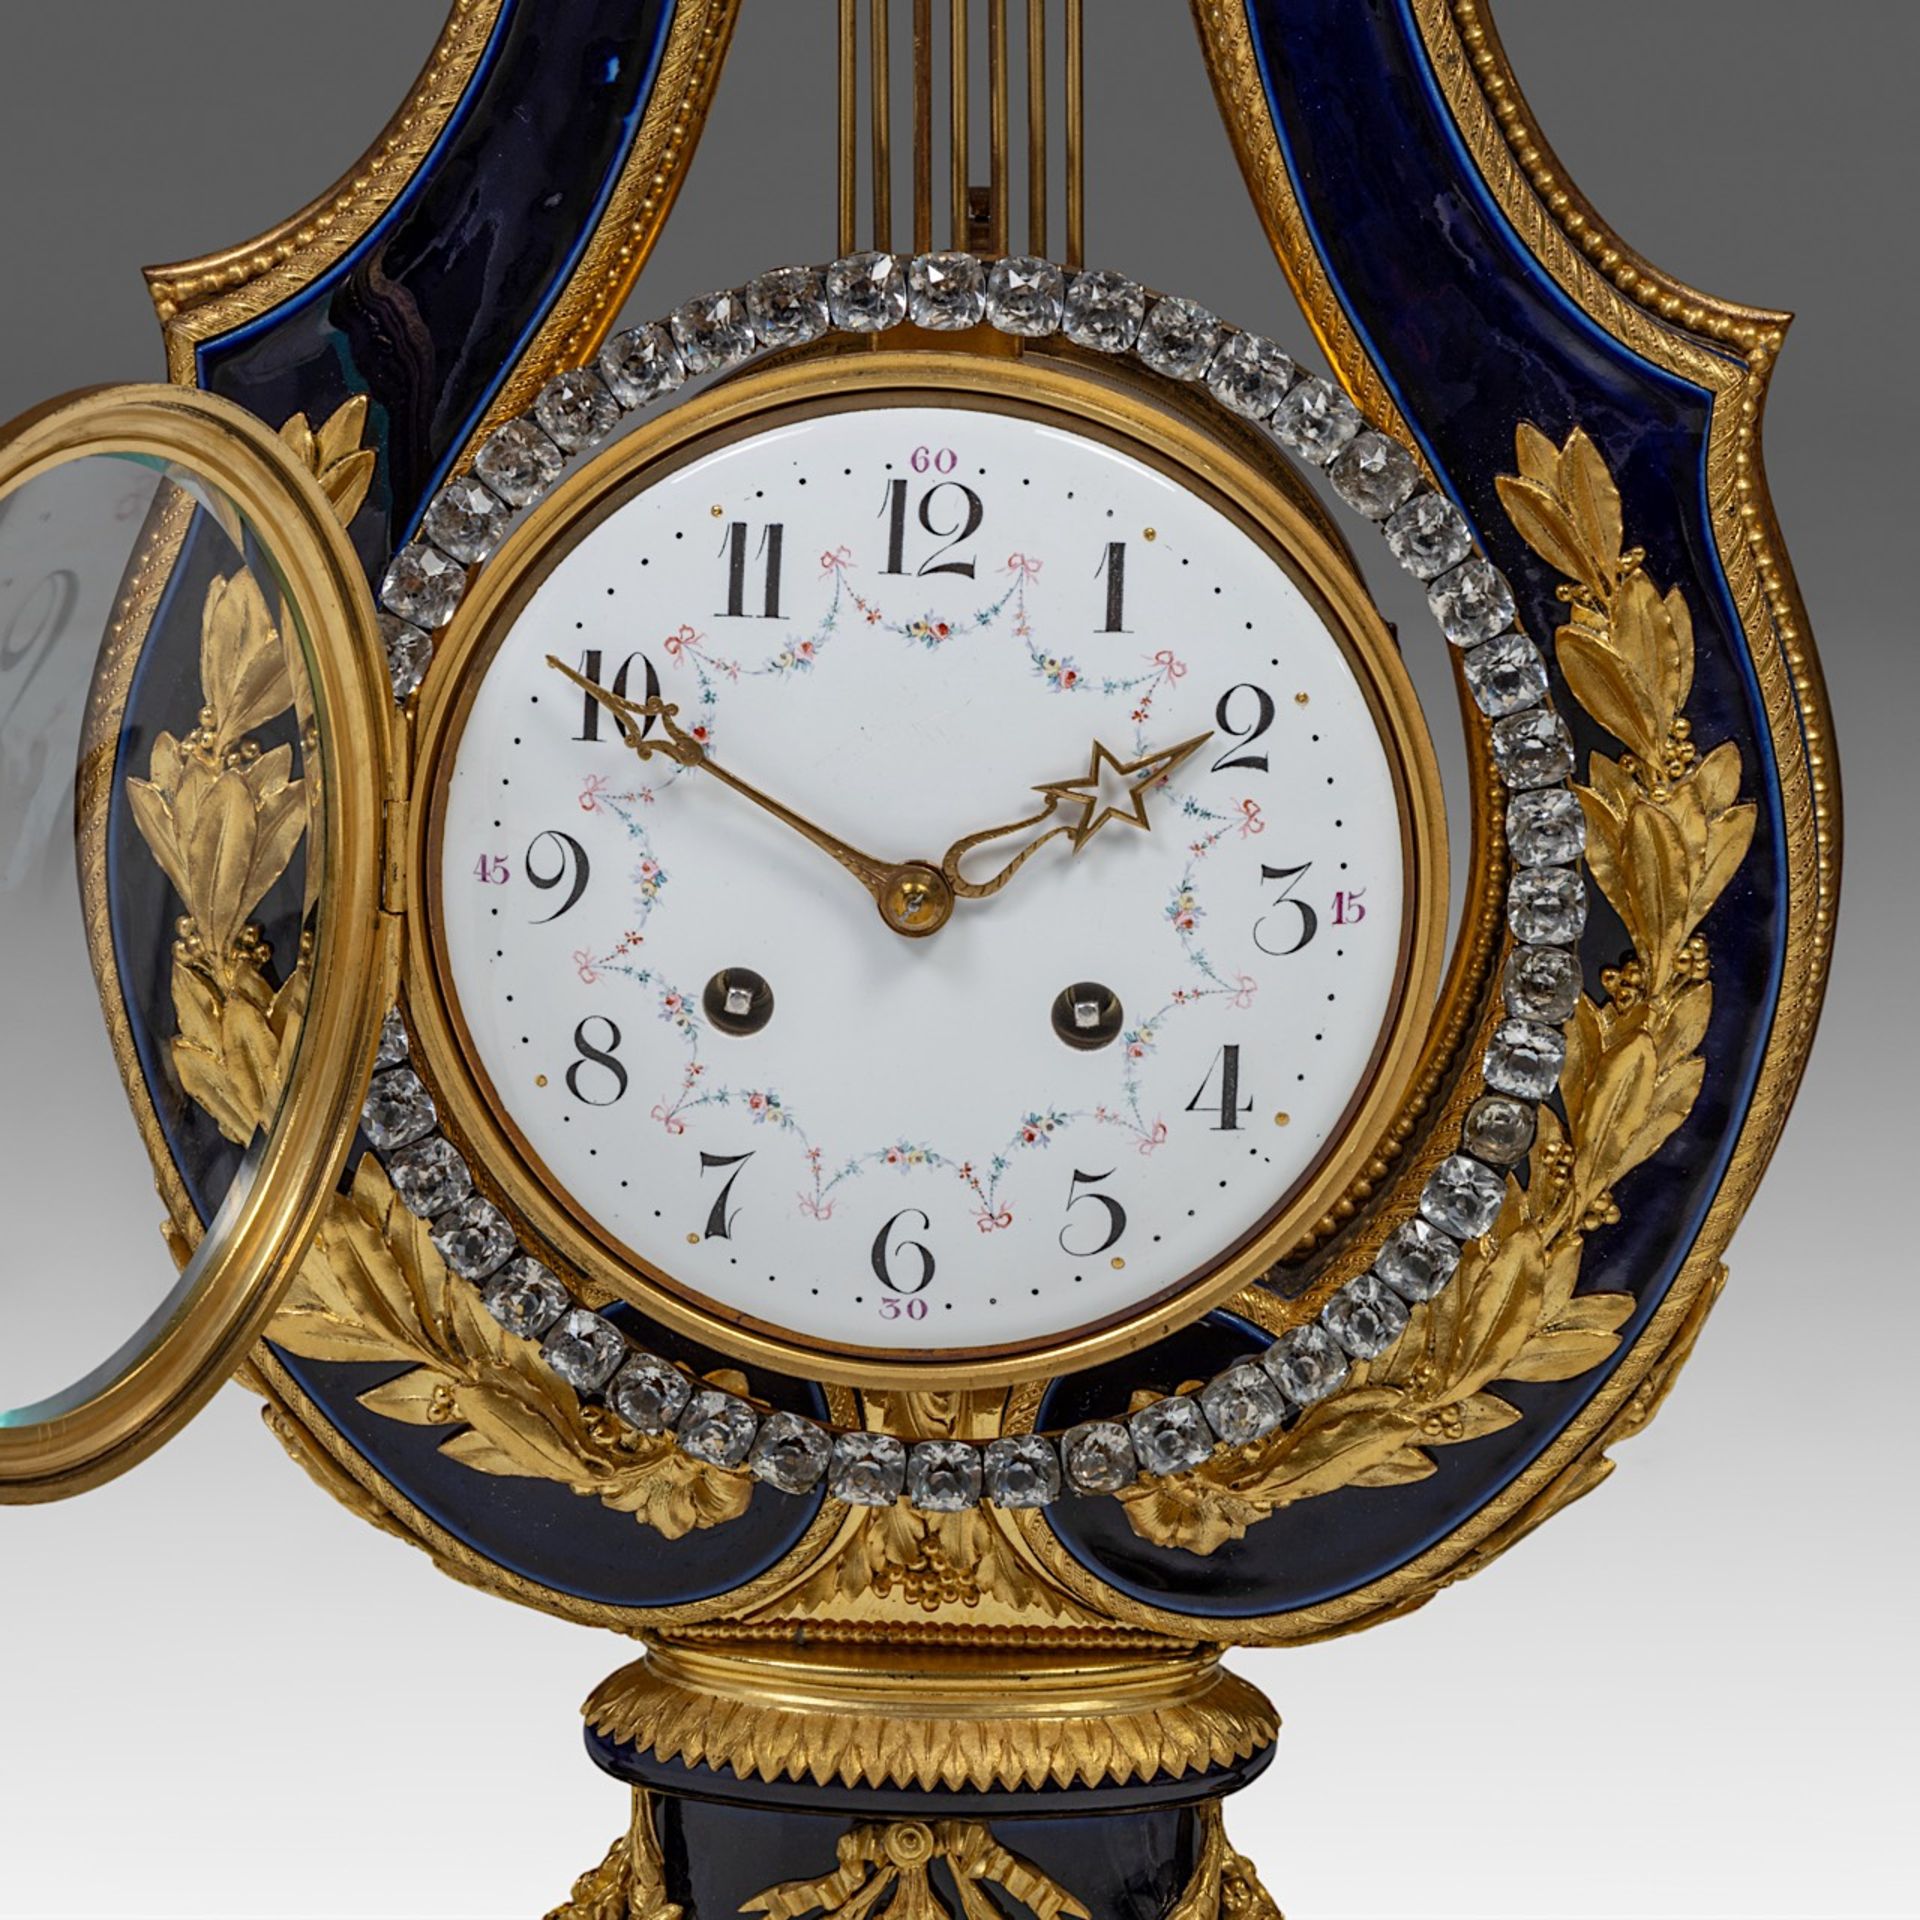 A fine Neoclassical three-piece cobalt blue porcelain and gilt bronze mounted clock set, H 55 - 65 c - Bild 6 aus 16